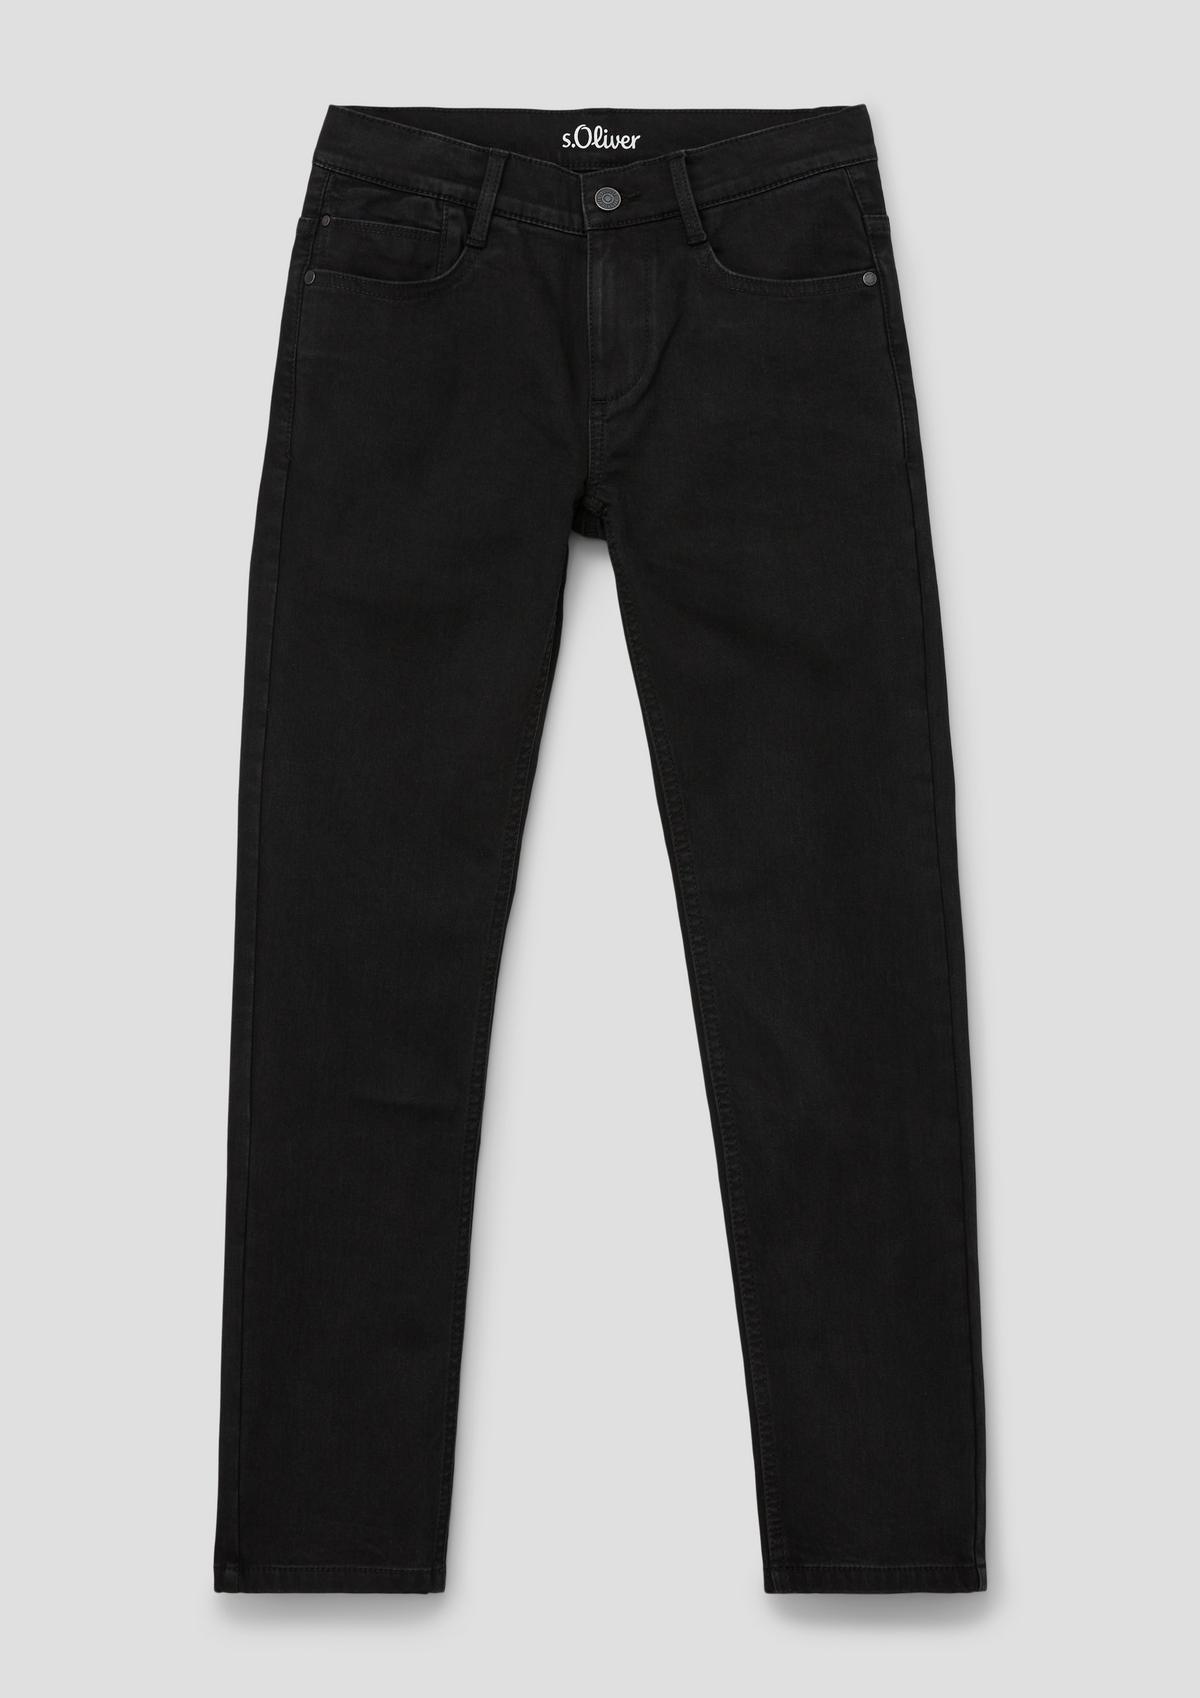 Seattle jeans / regular fit / mid rise / straight leg